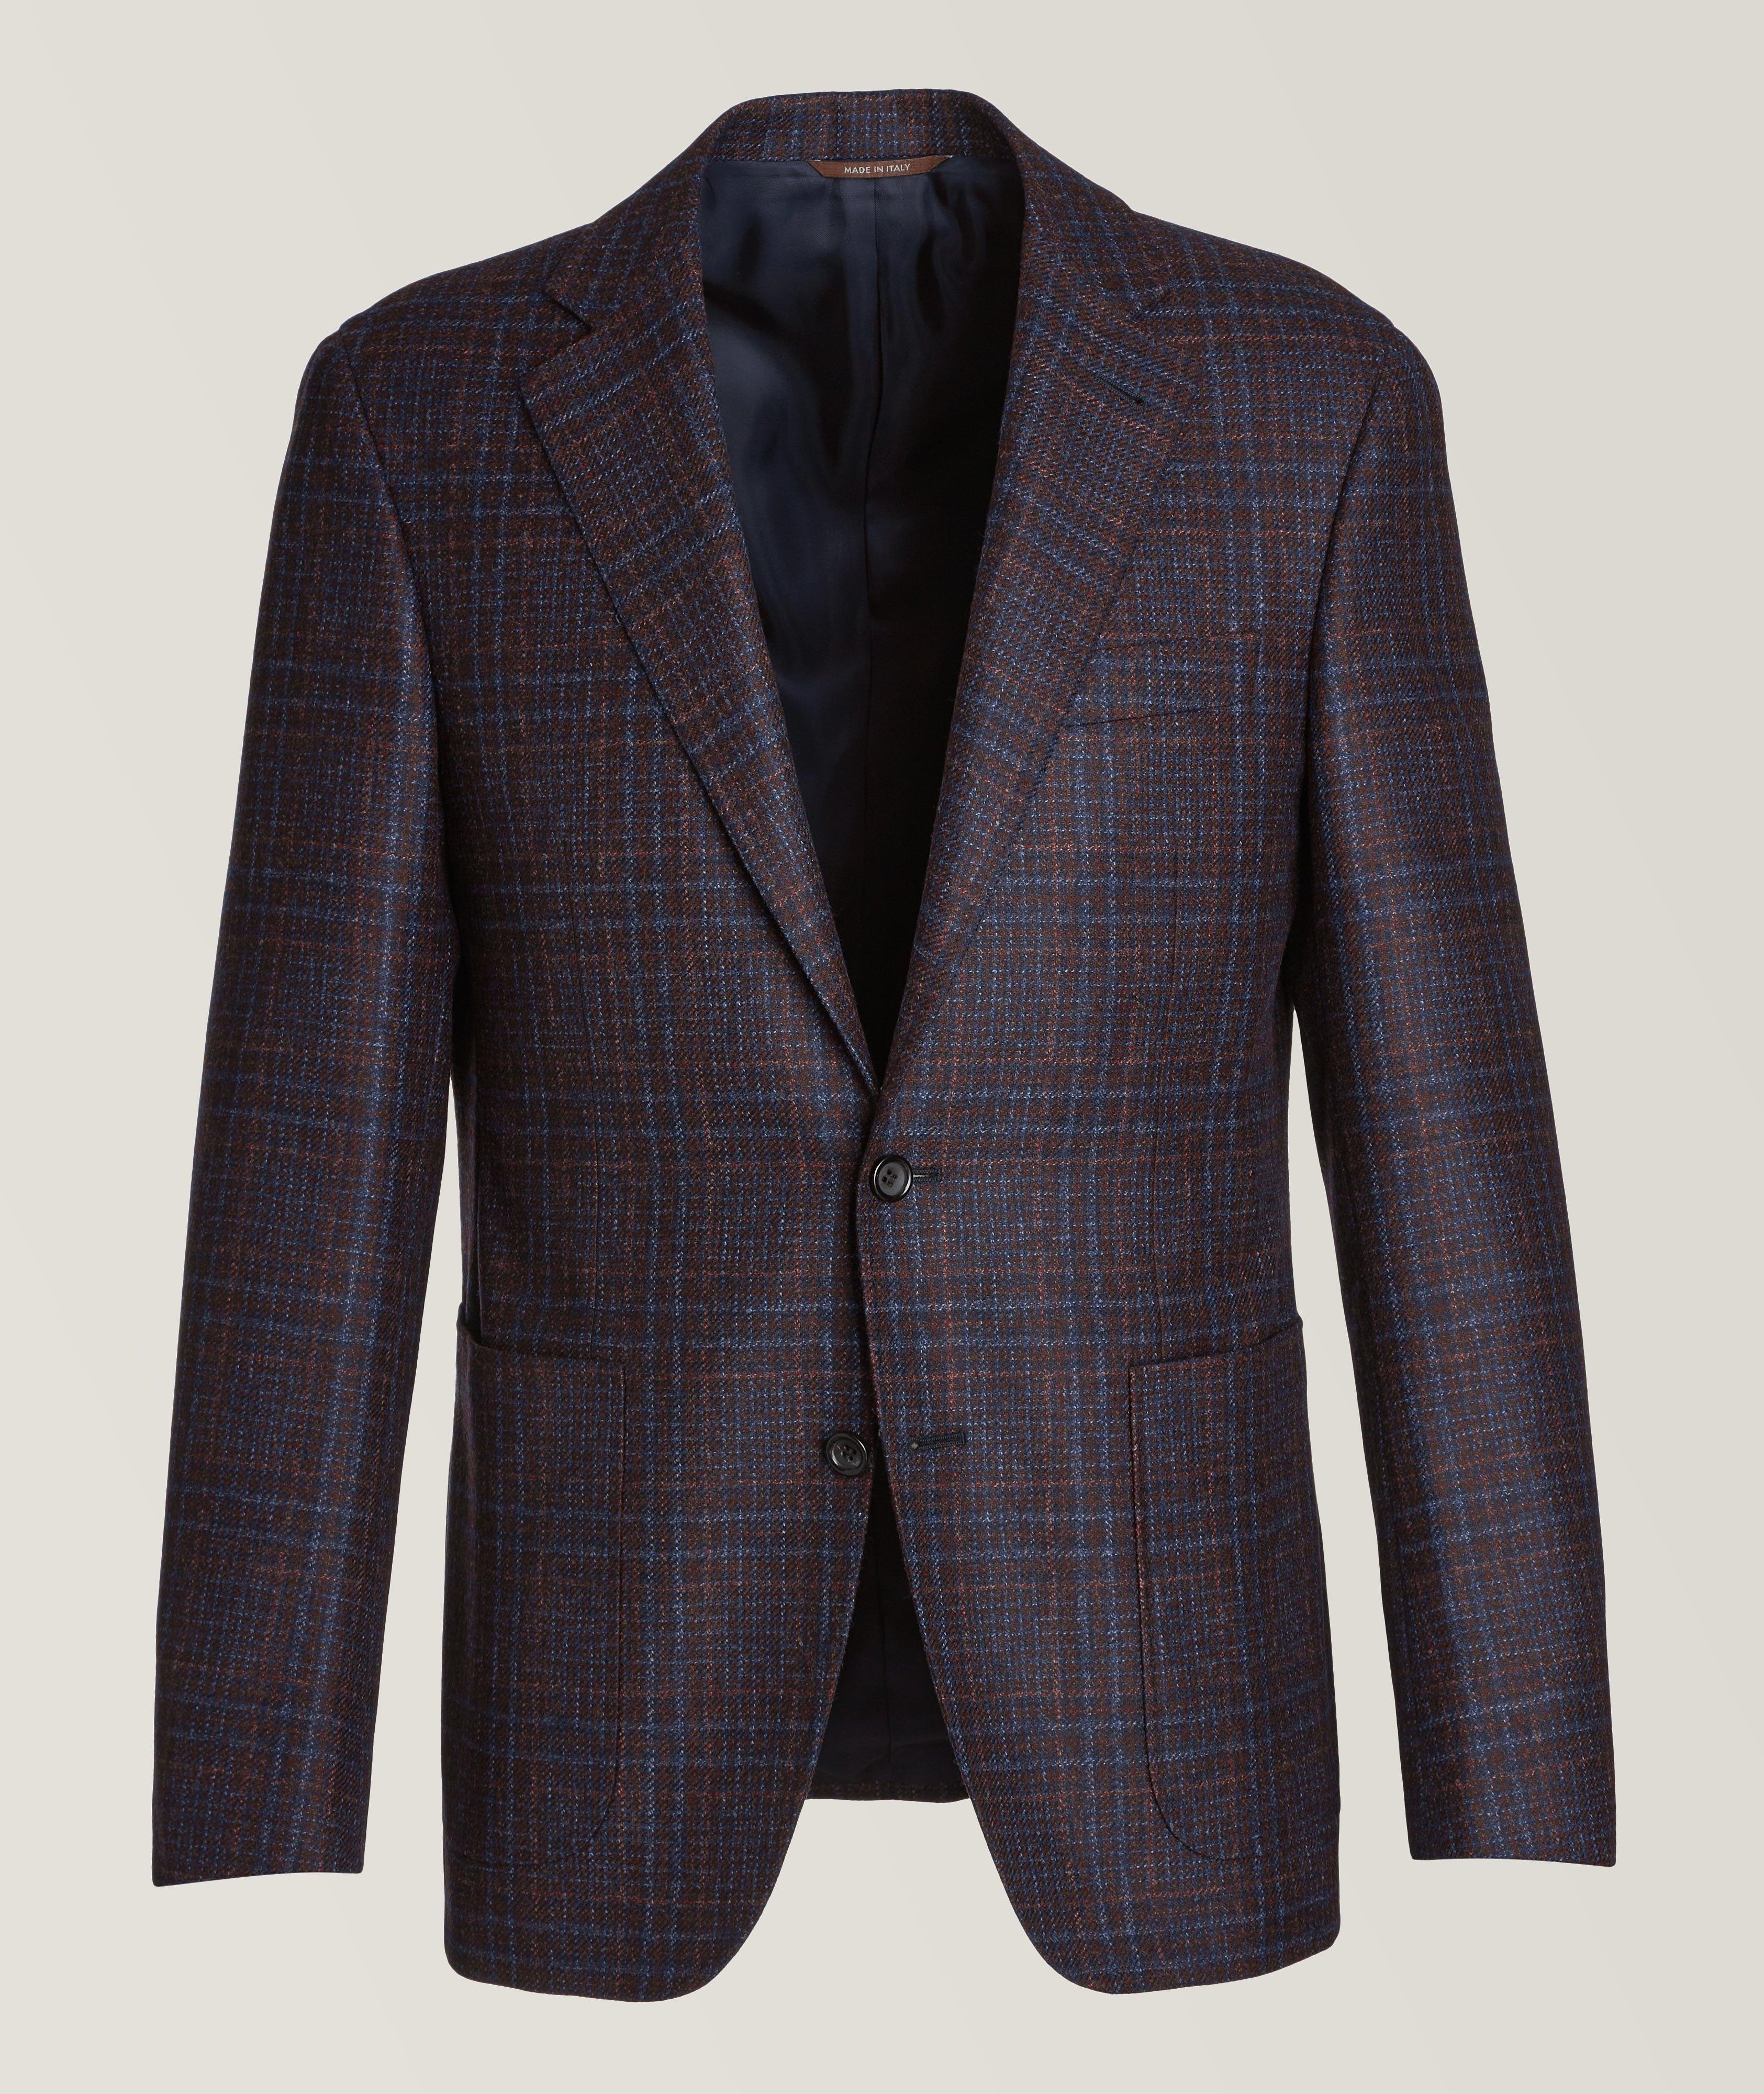 Kei Multi Checkered Wool Sport Jacket image 0